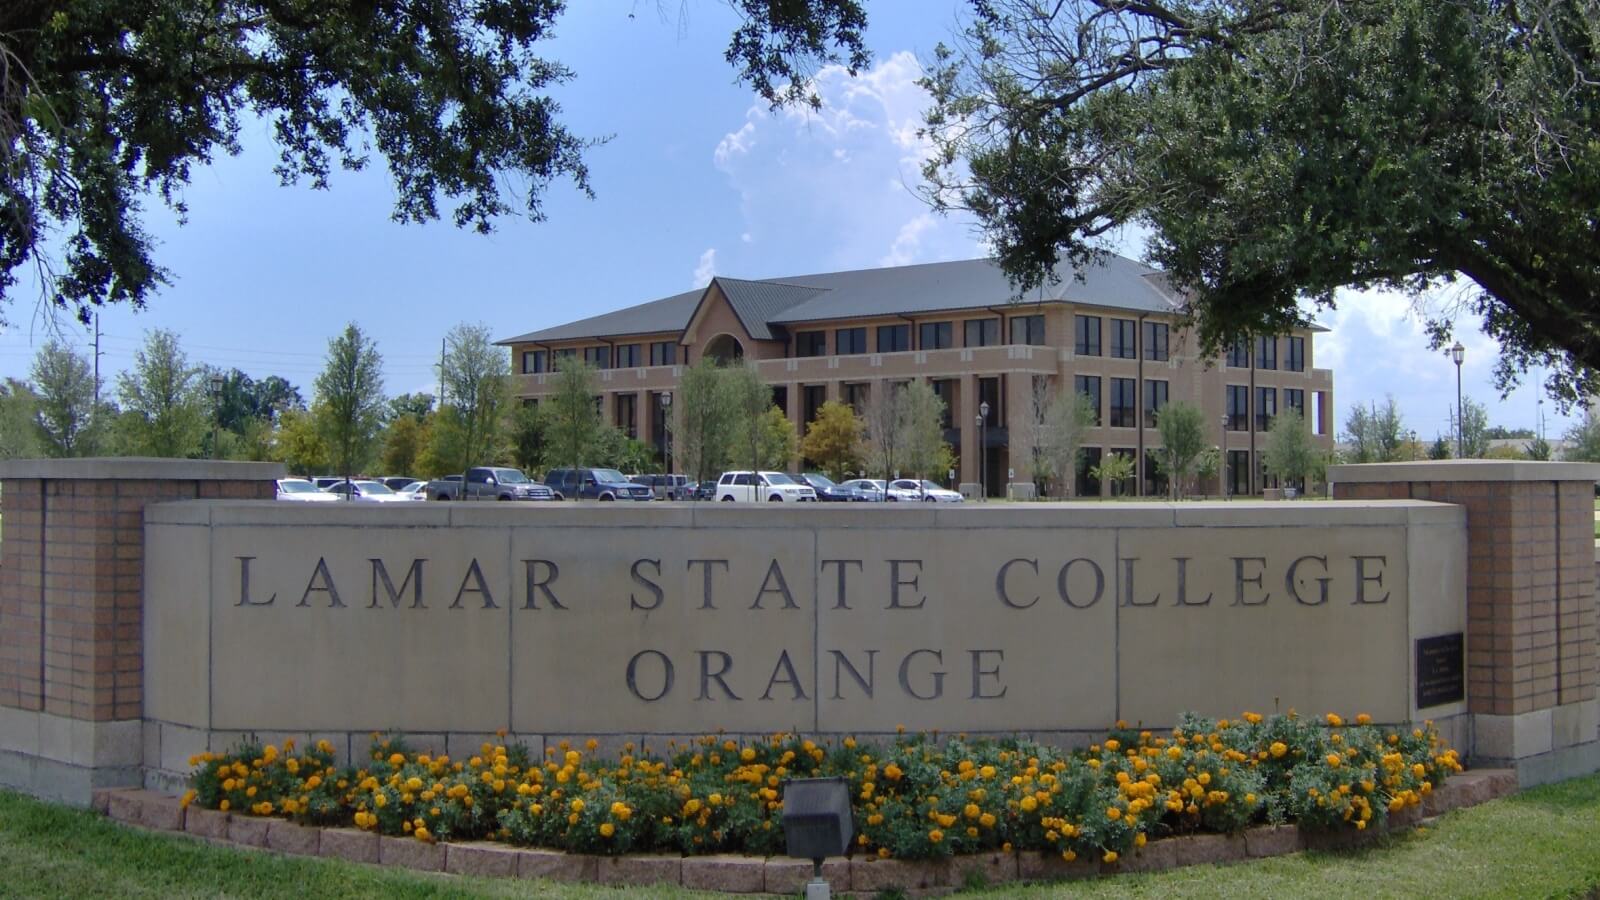 About Lamar State College Orange